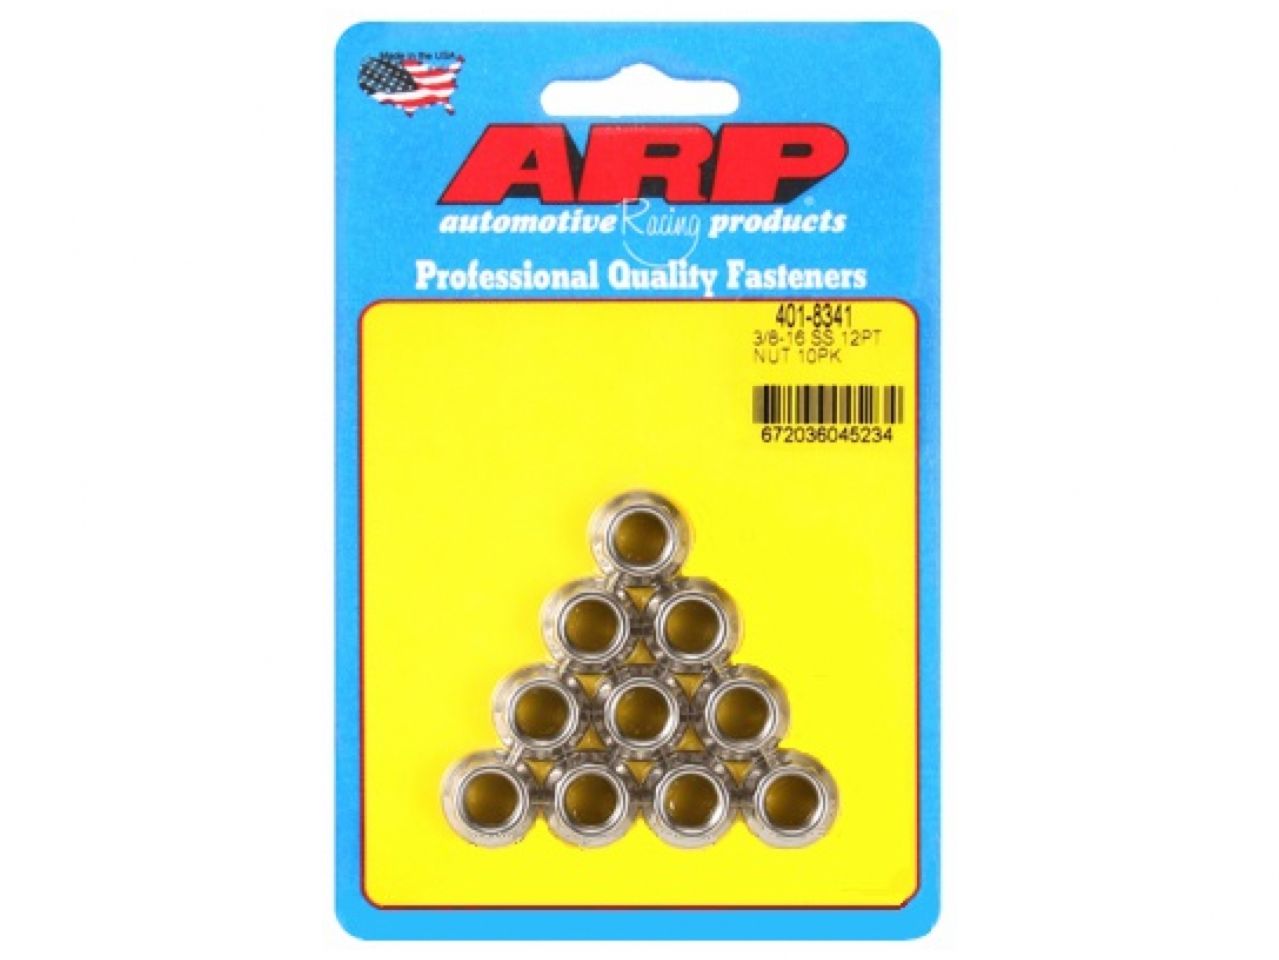 ARP Metric Nuts 401-8341 Item Image